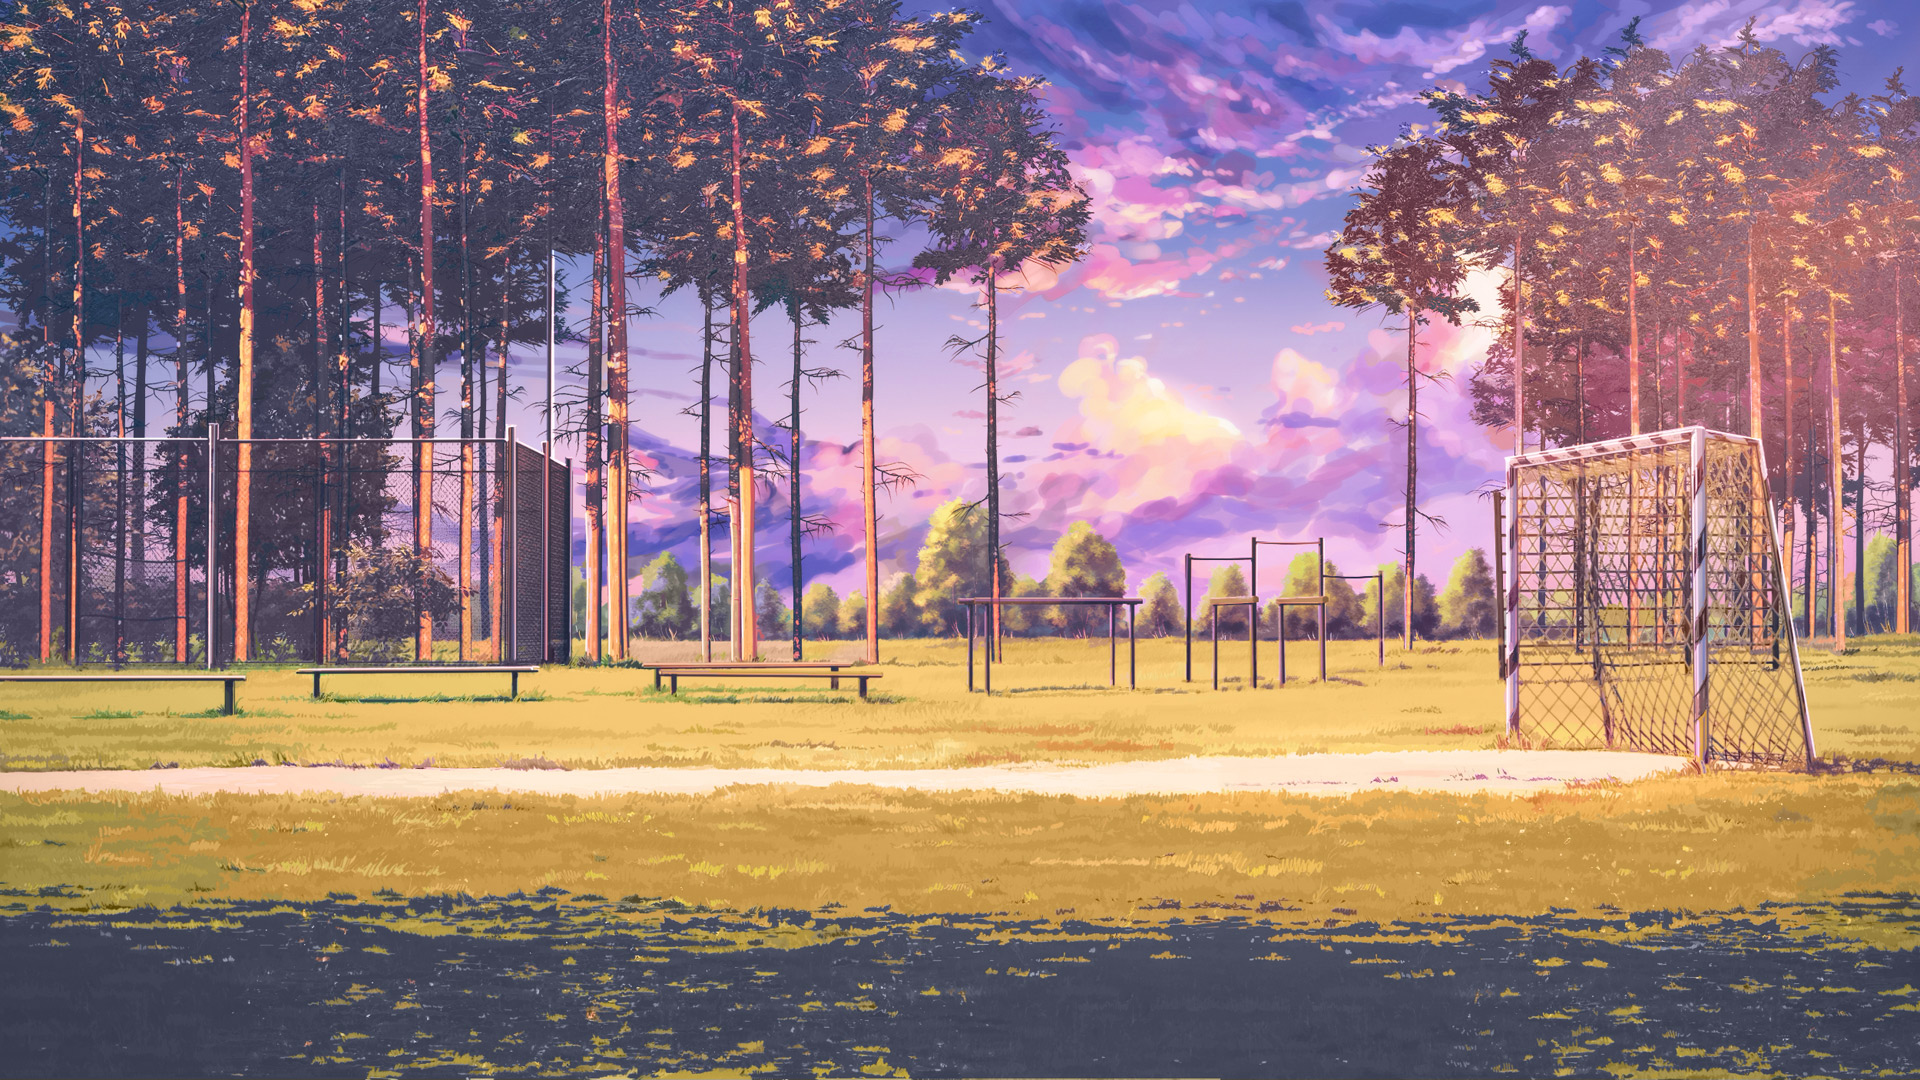 Anime Artwork Sunset Garden Bench Grass Soccer Field Outdoors Everlasting Summer Visual Novel 1920x1080